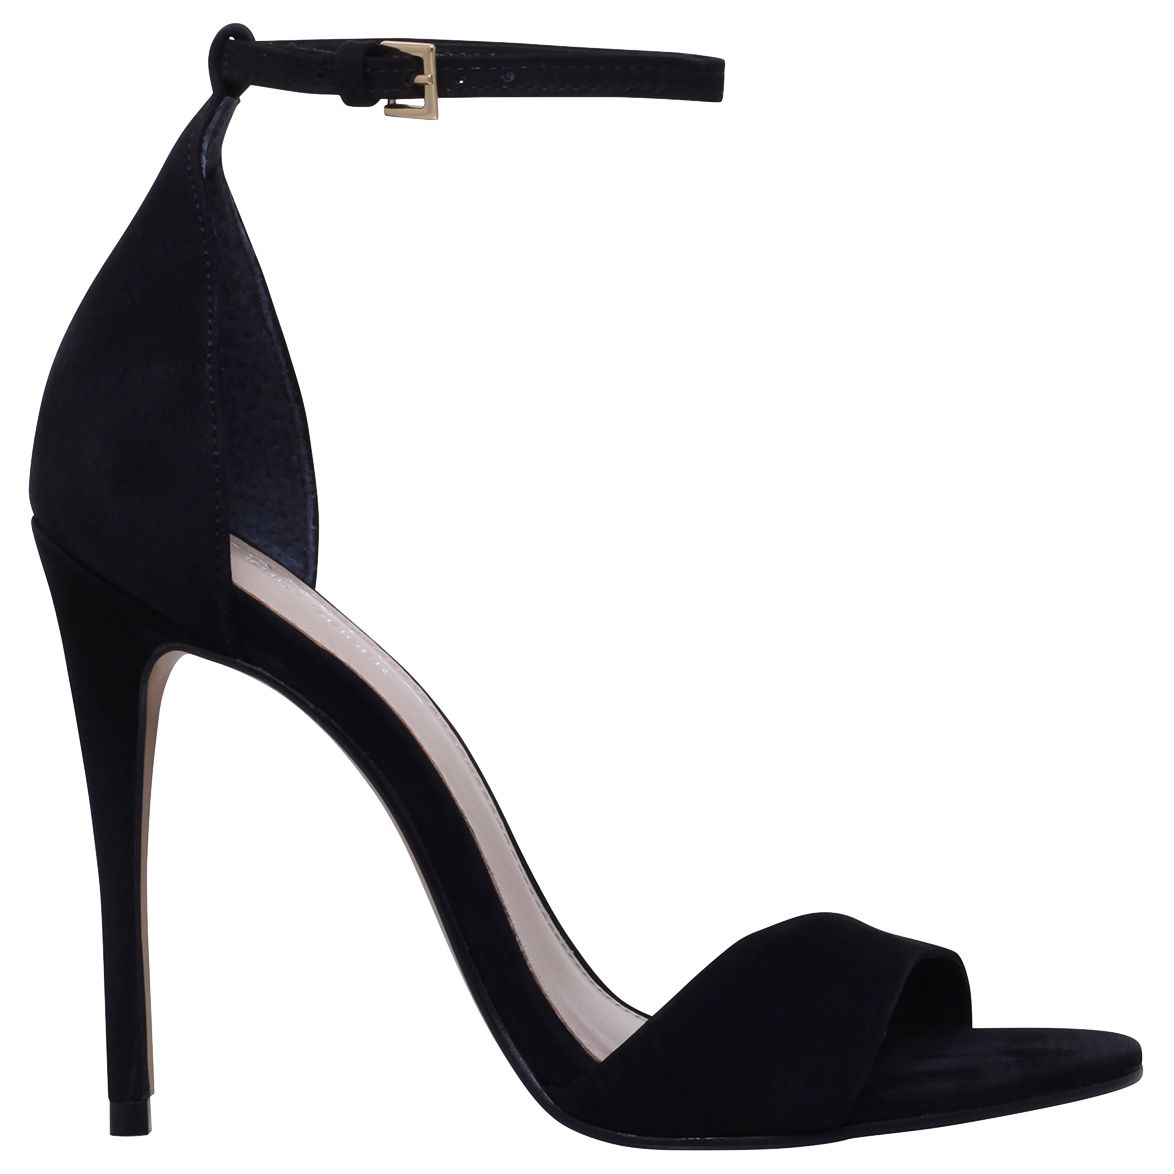 Carvela Glimmer High Heel Sandals, Black Nubuck, 3